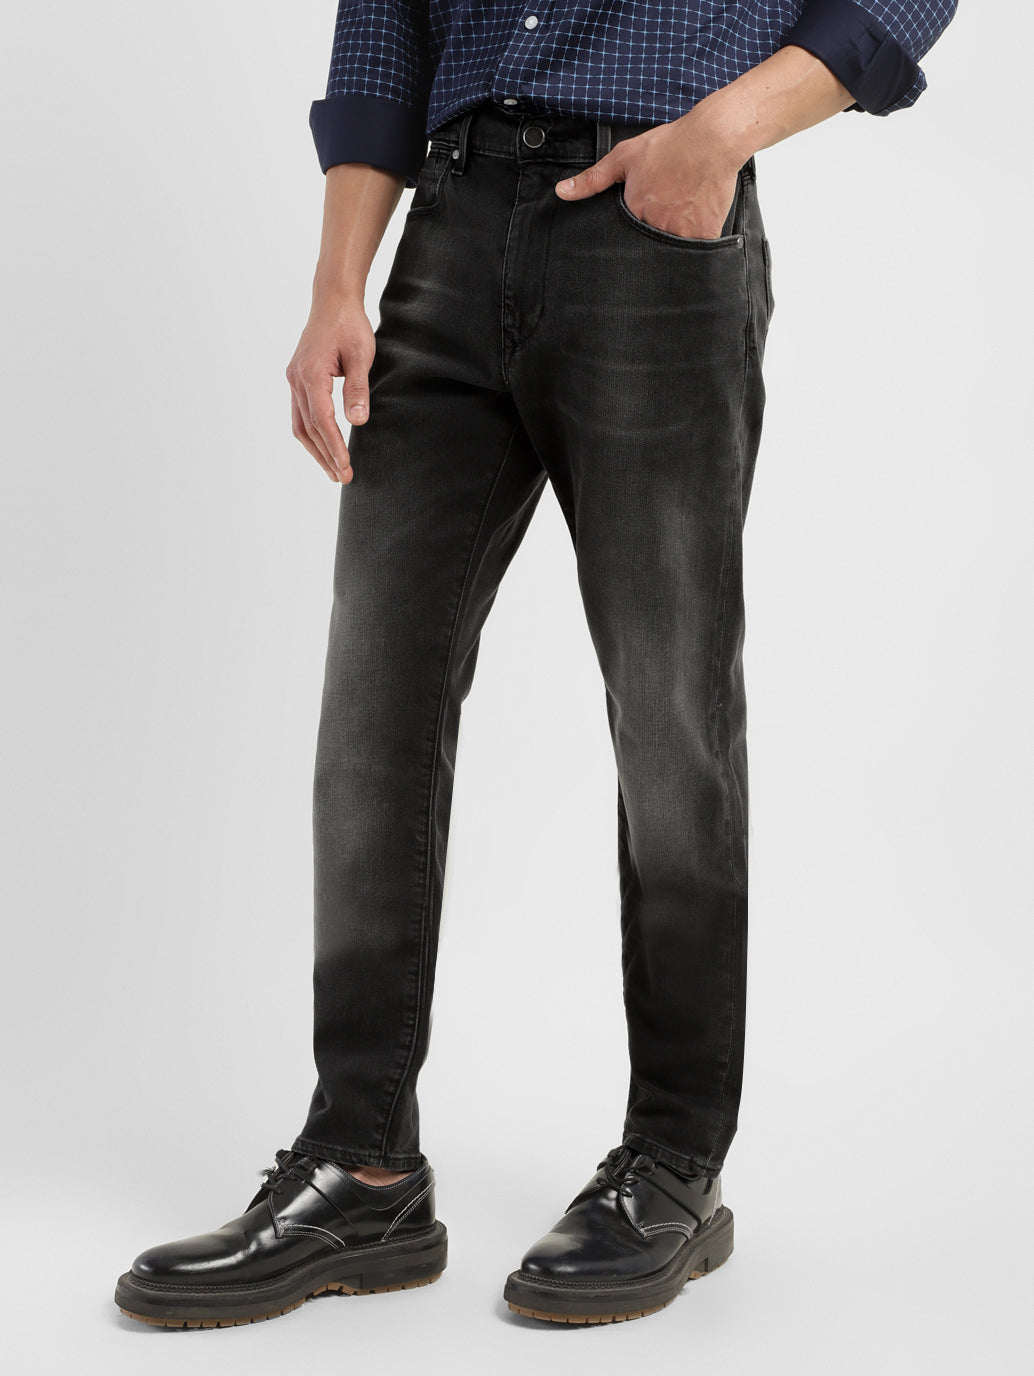 Black Flame Jeans Mens SIZE 32 Custom Hand Painted Denim – meanstreakdesign